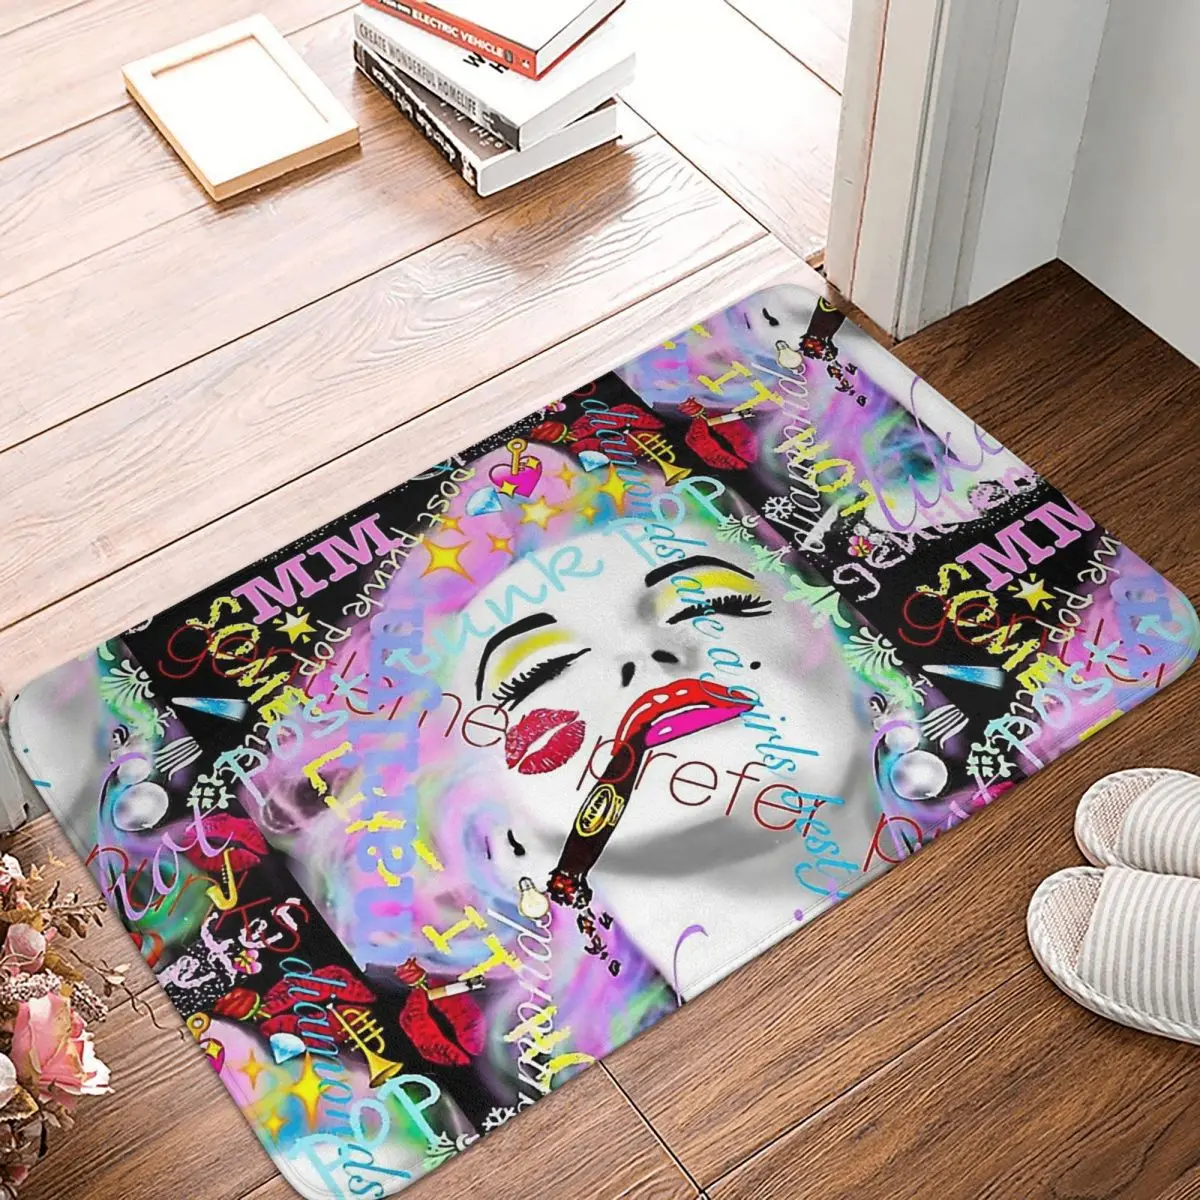 

Marilyn Monroe Sexy Goddess Non-slip Doormat Living Room Mat With Graffiti Hallway Carpet Welcome Rug Home Decor